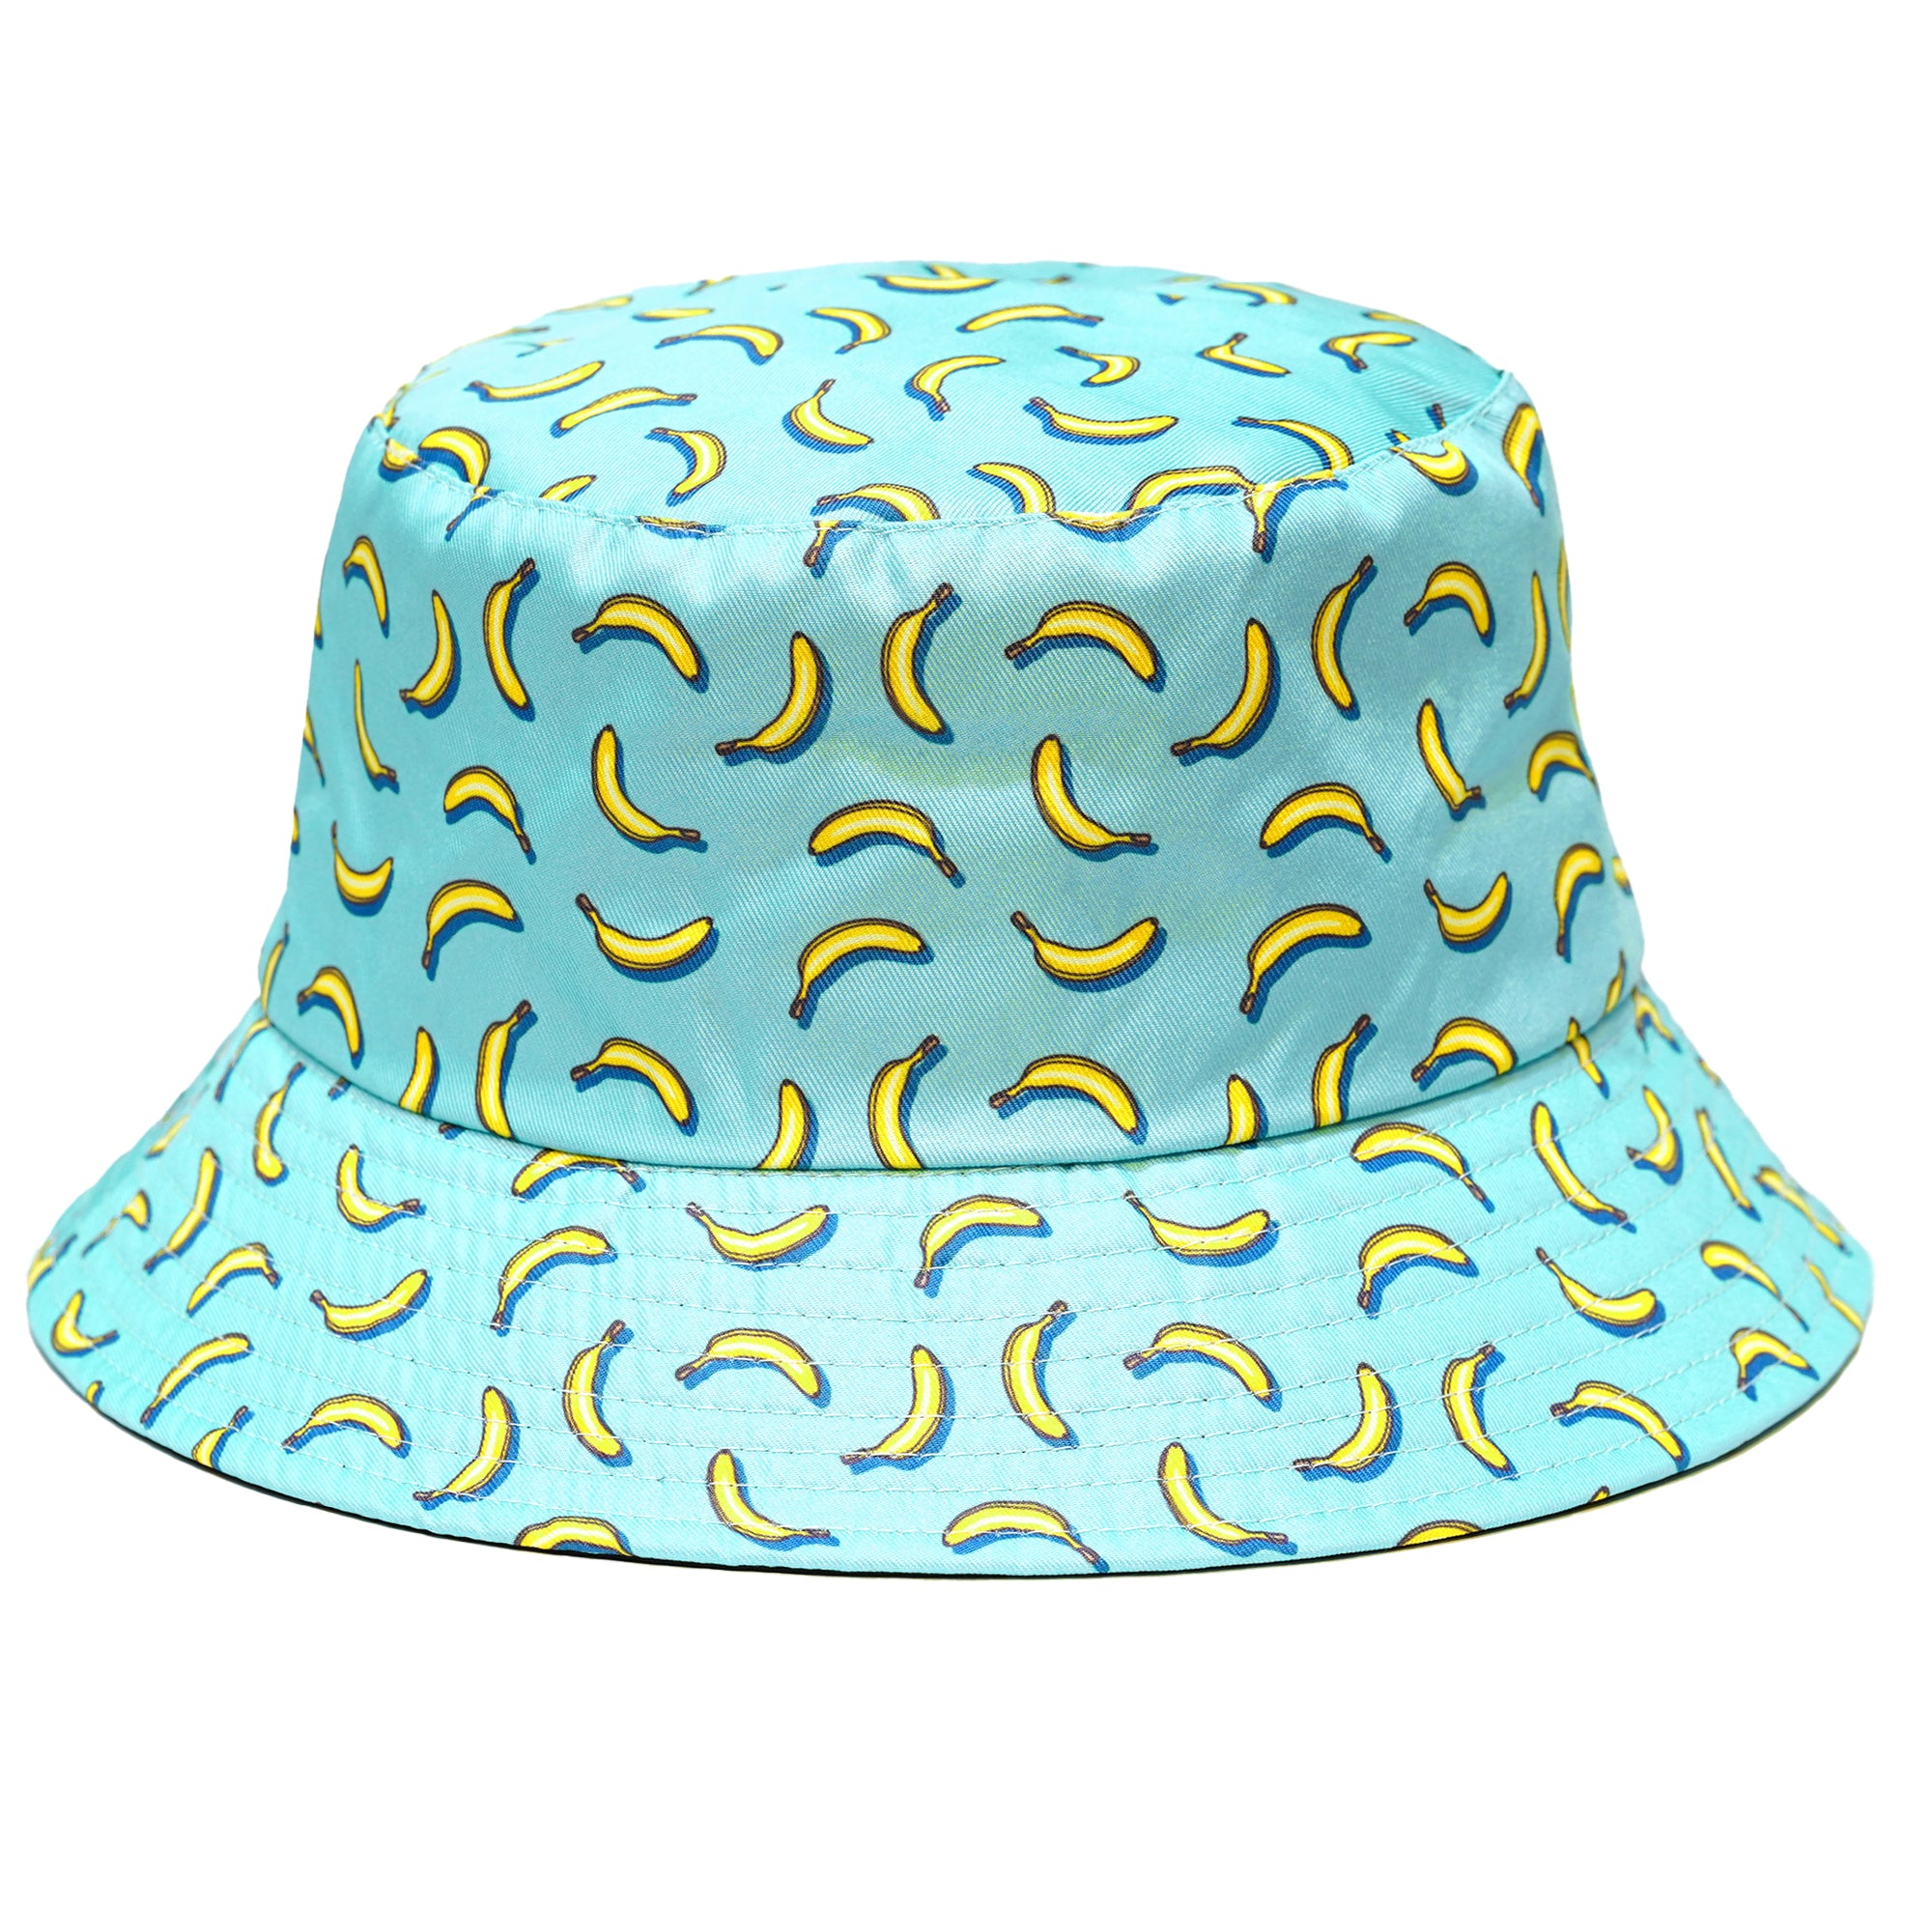 Rave Bucket Hat